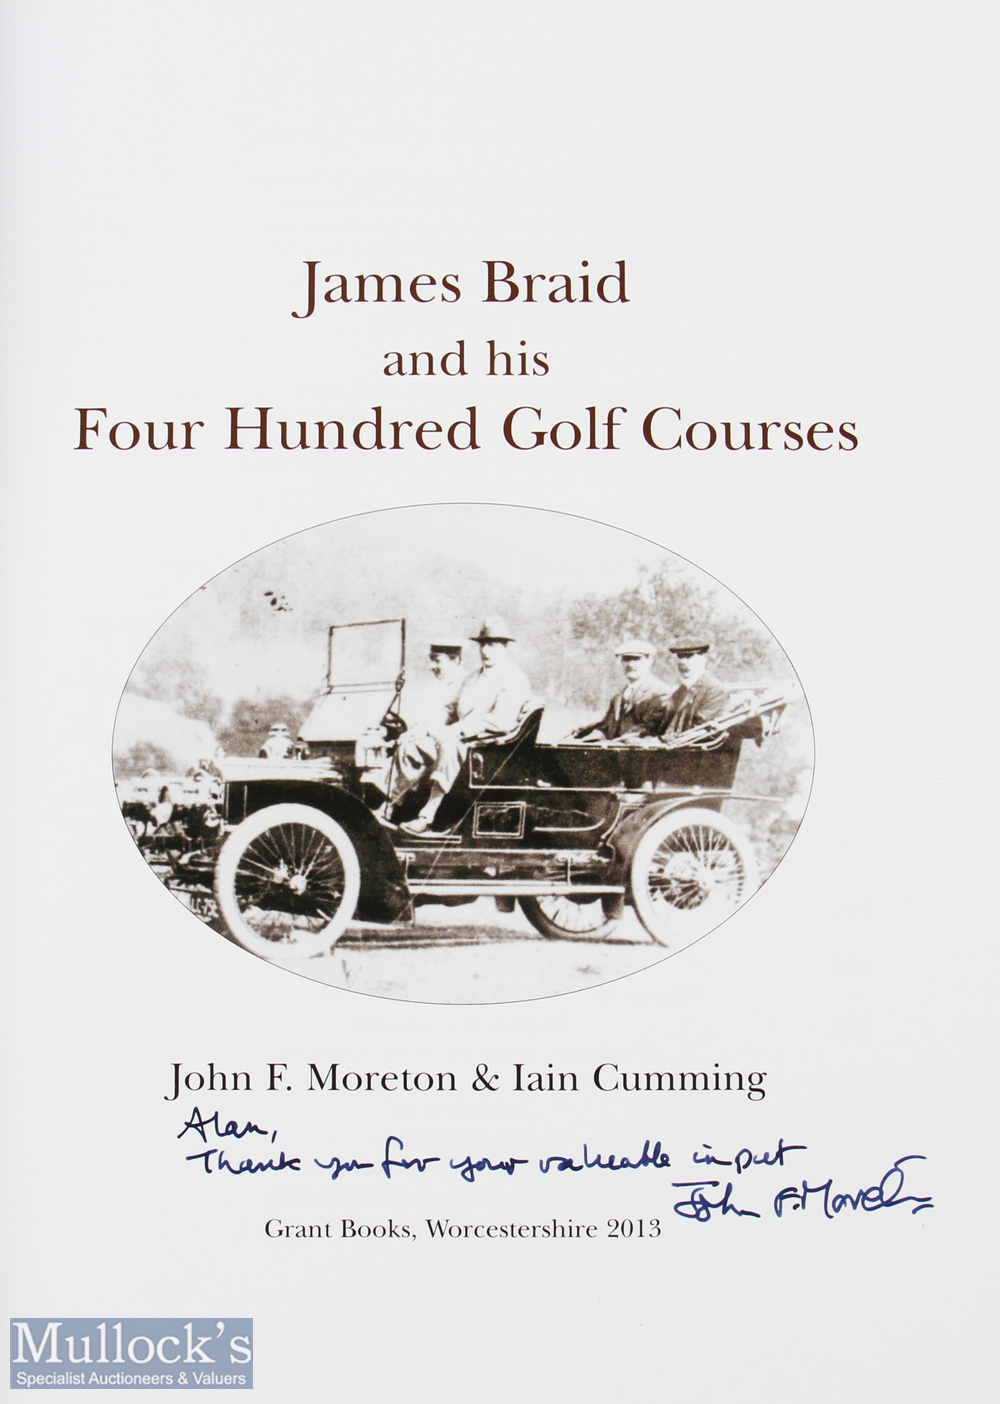 John Moreton (signed) & Iain Cumming - "James Braid and his Four Hundred Golf Courses" 1st ed. - Image 2 of 2